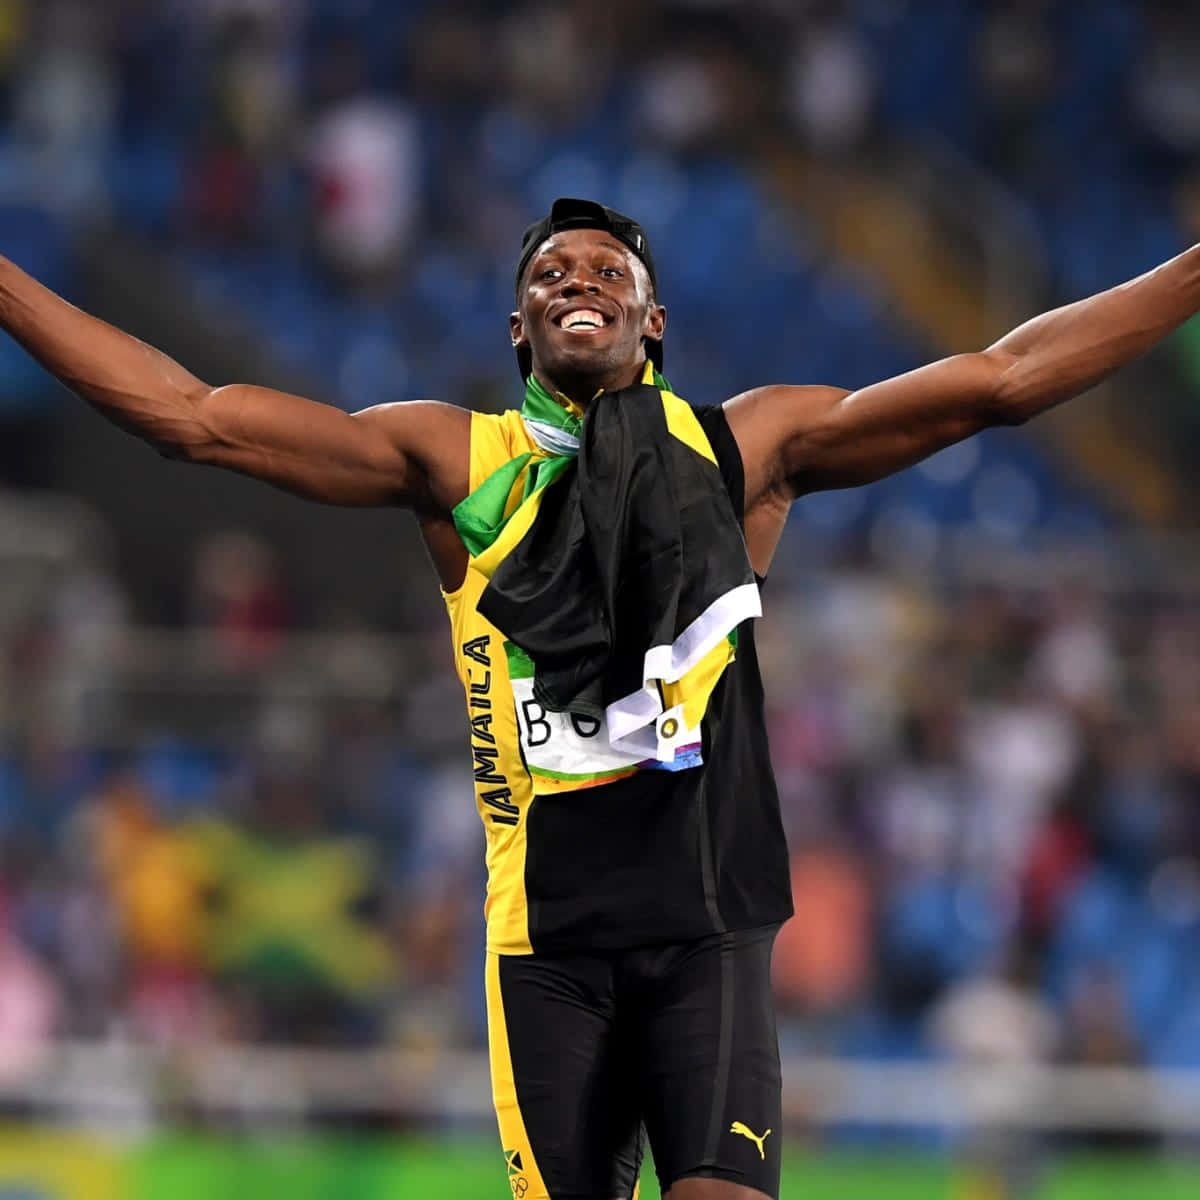 Usain Bolt Running And Cheering Wallpaper